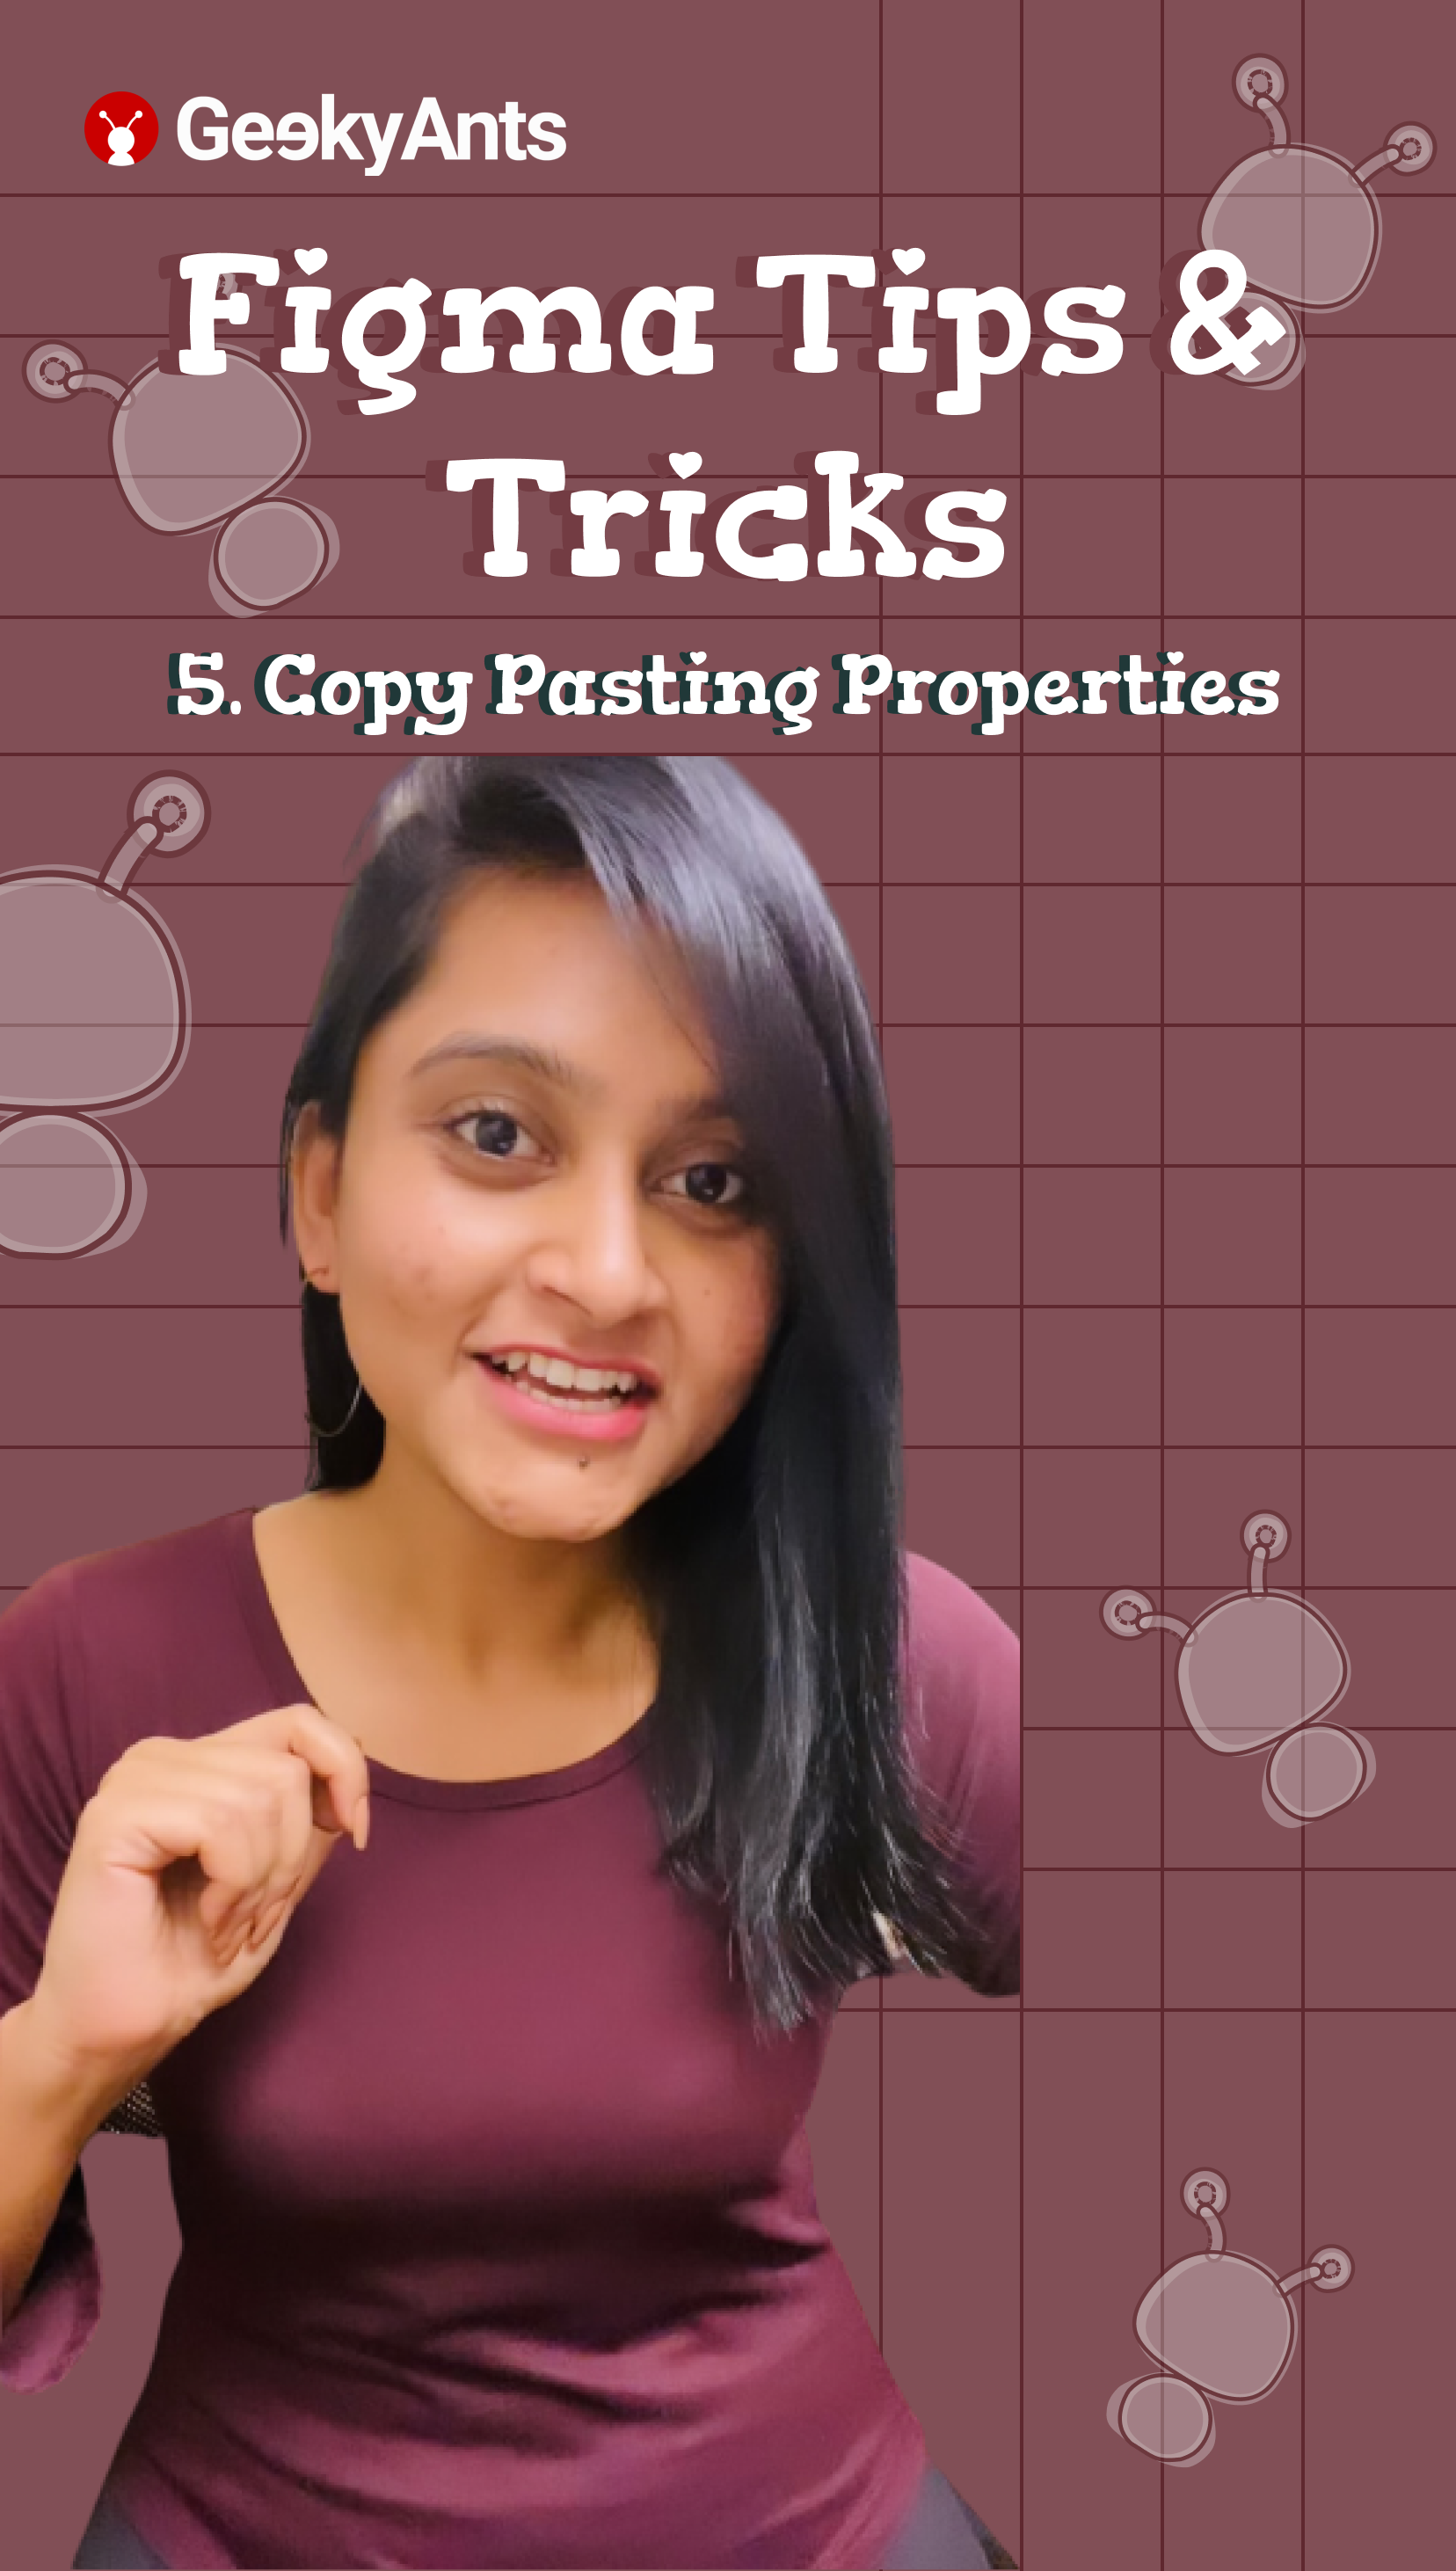 Copy pasting properties